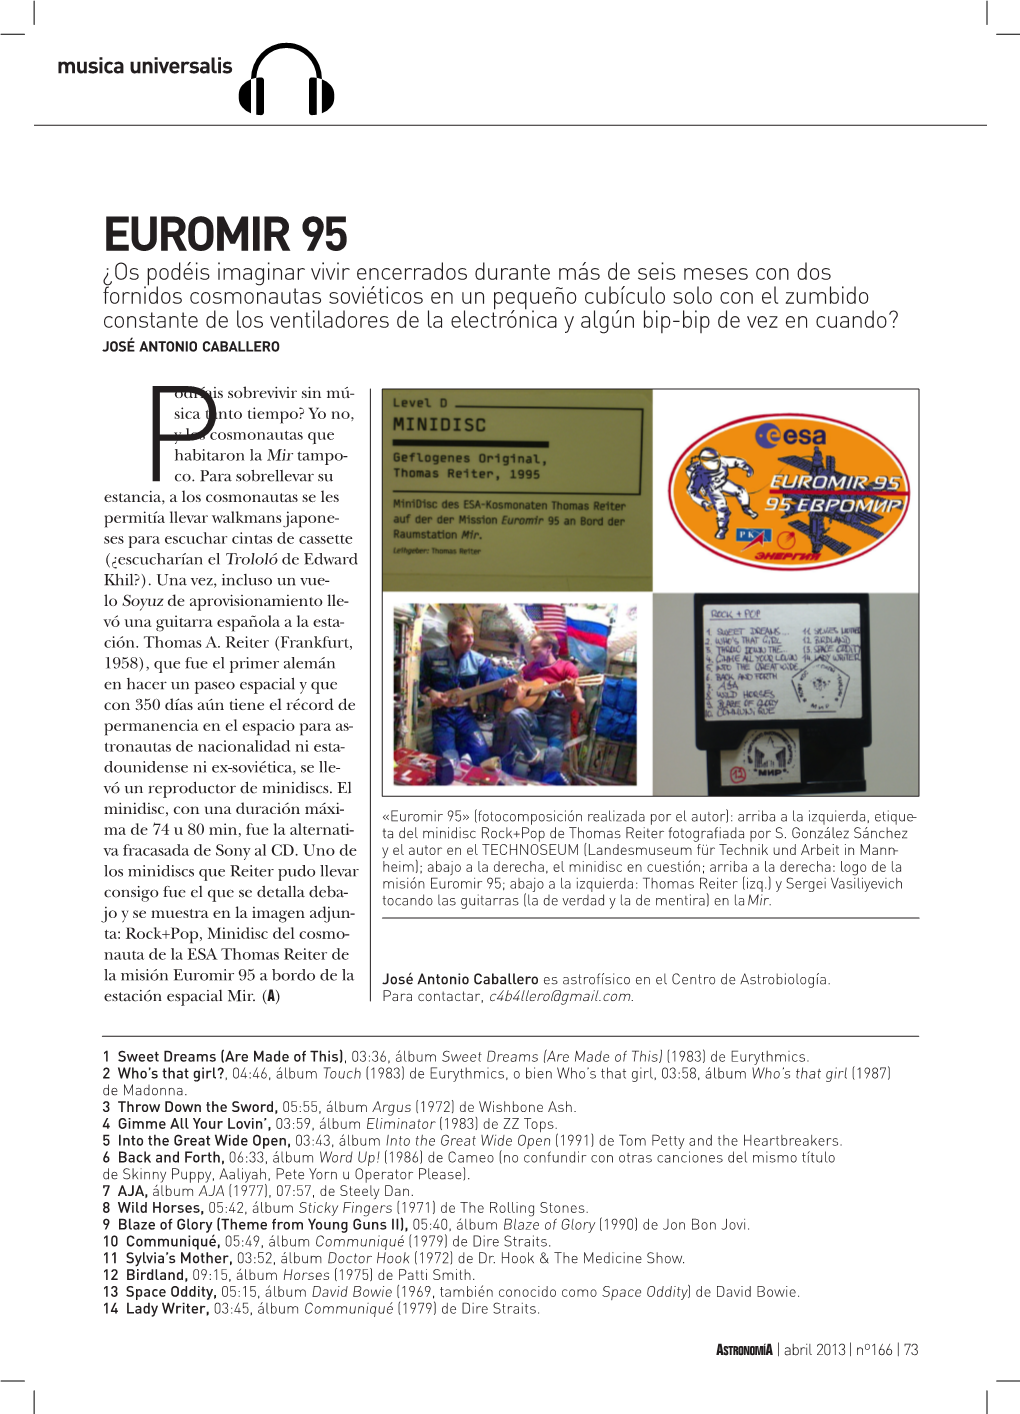 MU04: Euromir 95 (Abr. 2013)